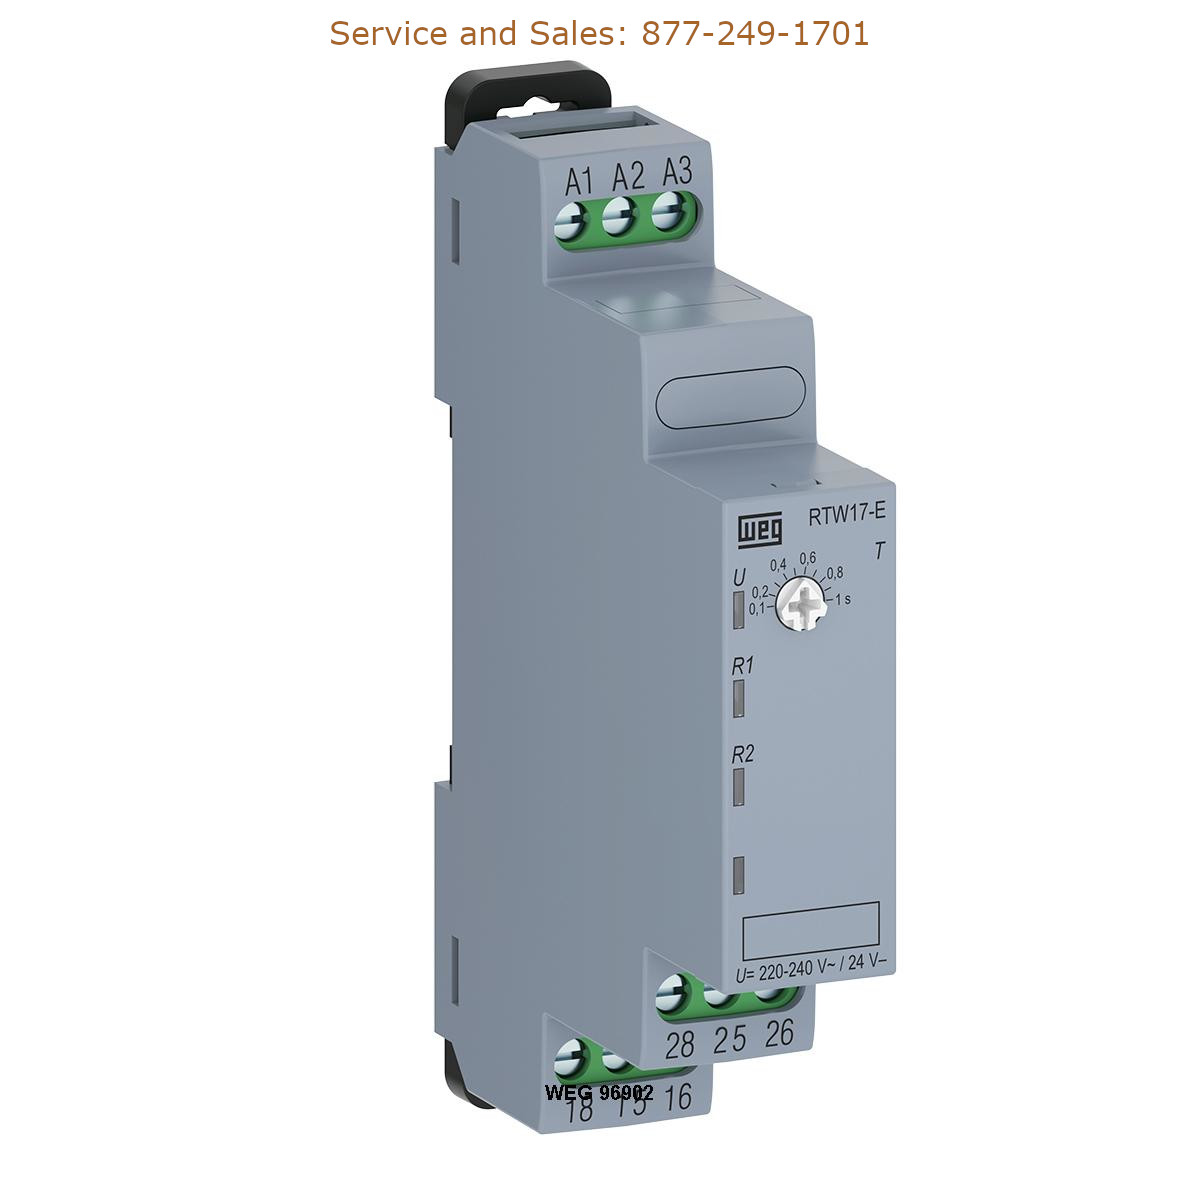 WEG 96902 WEG Model Number 96902 WEG Controls, Electronic Relays Repair Service, Troubleshooting, Replacement Parts https://gesrepair.com/wp-content/uploads/2022/WEG/WEG_96902_Controls_Electronic_Relays.jpg